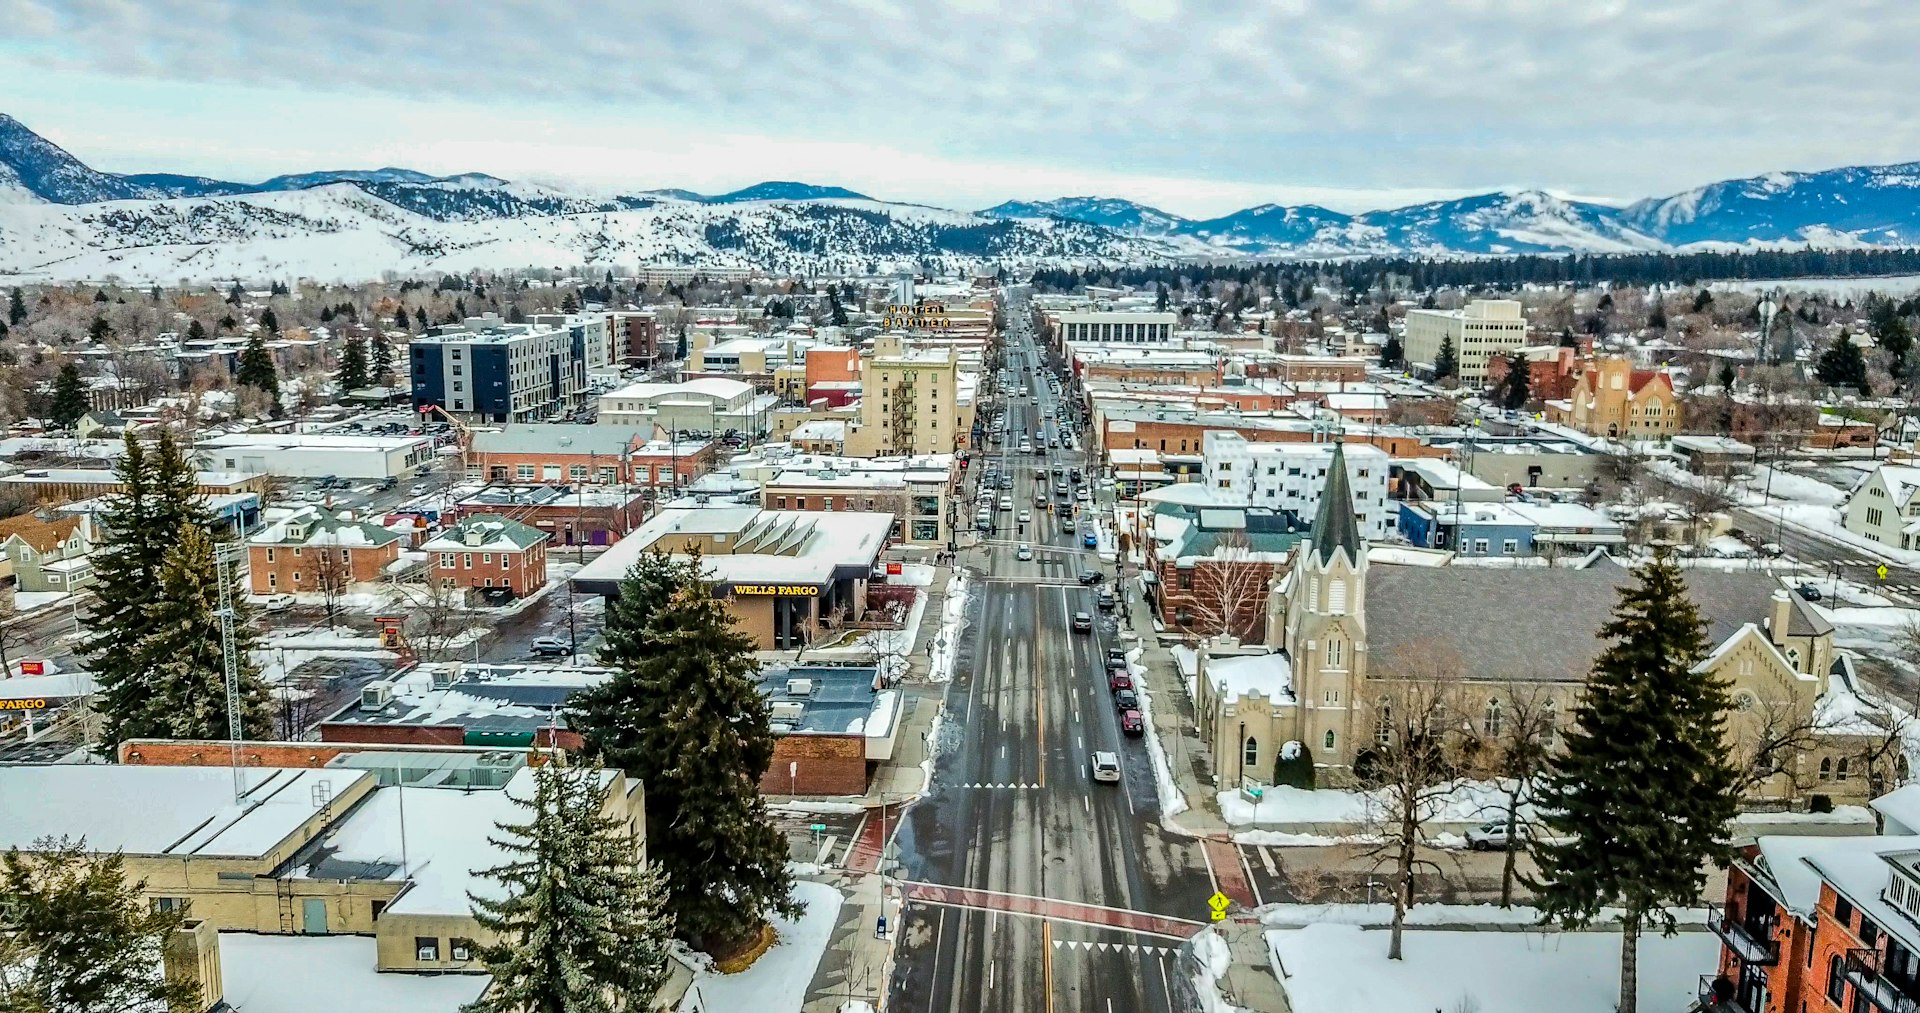 Looking over Main Street in Bozeman, Montana